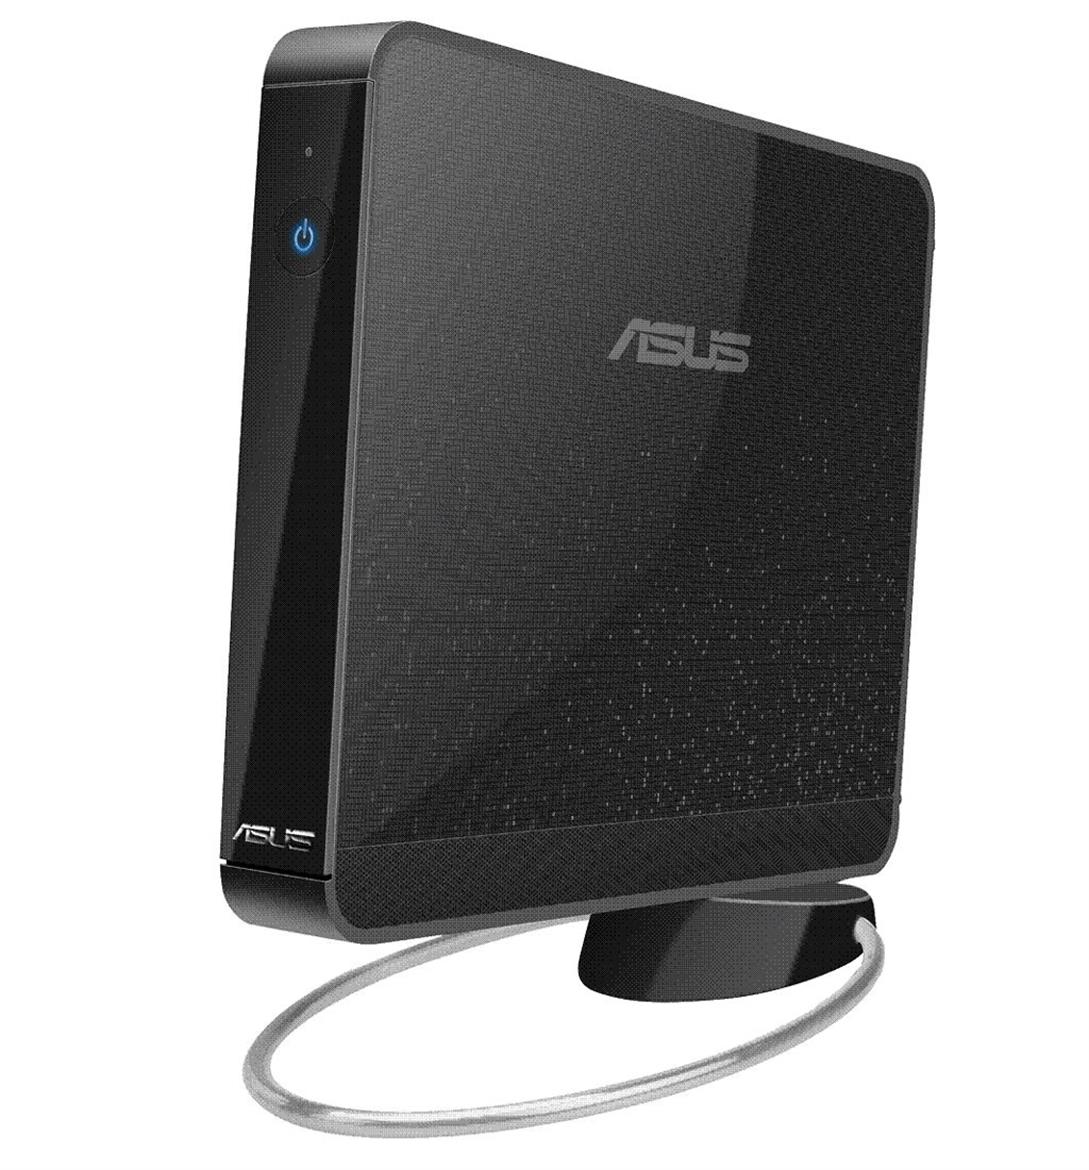 Asus Eee PC Desktop, Eee Box Unveiled